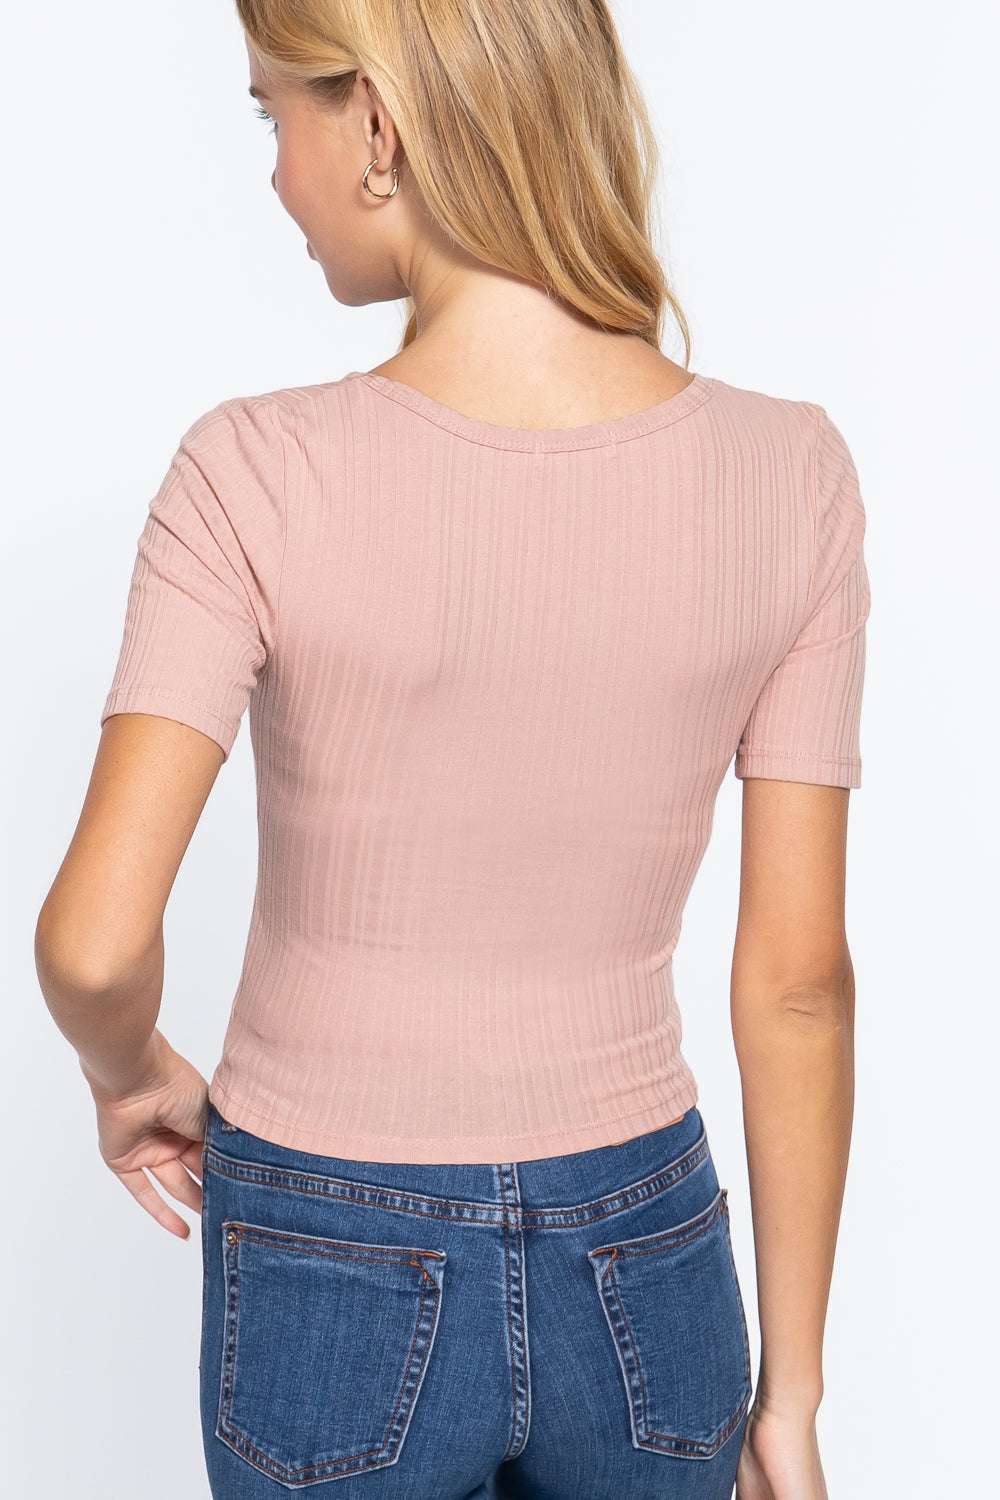 Elbow Sleeve Rib Knit Pink Cardigan Shirts & Tops jehouze 